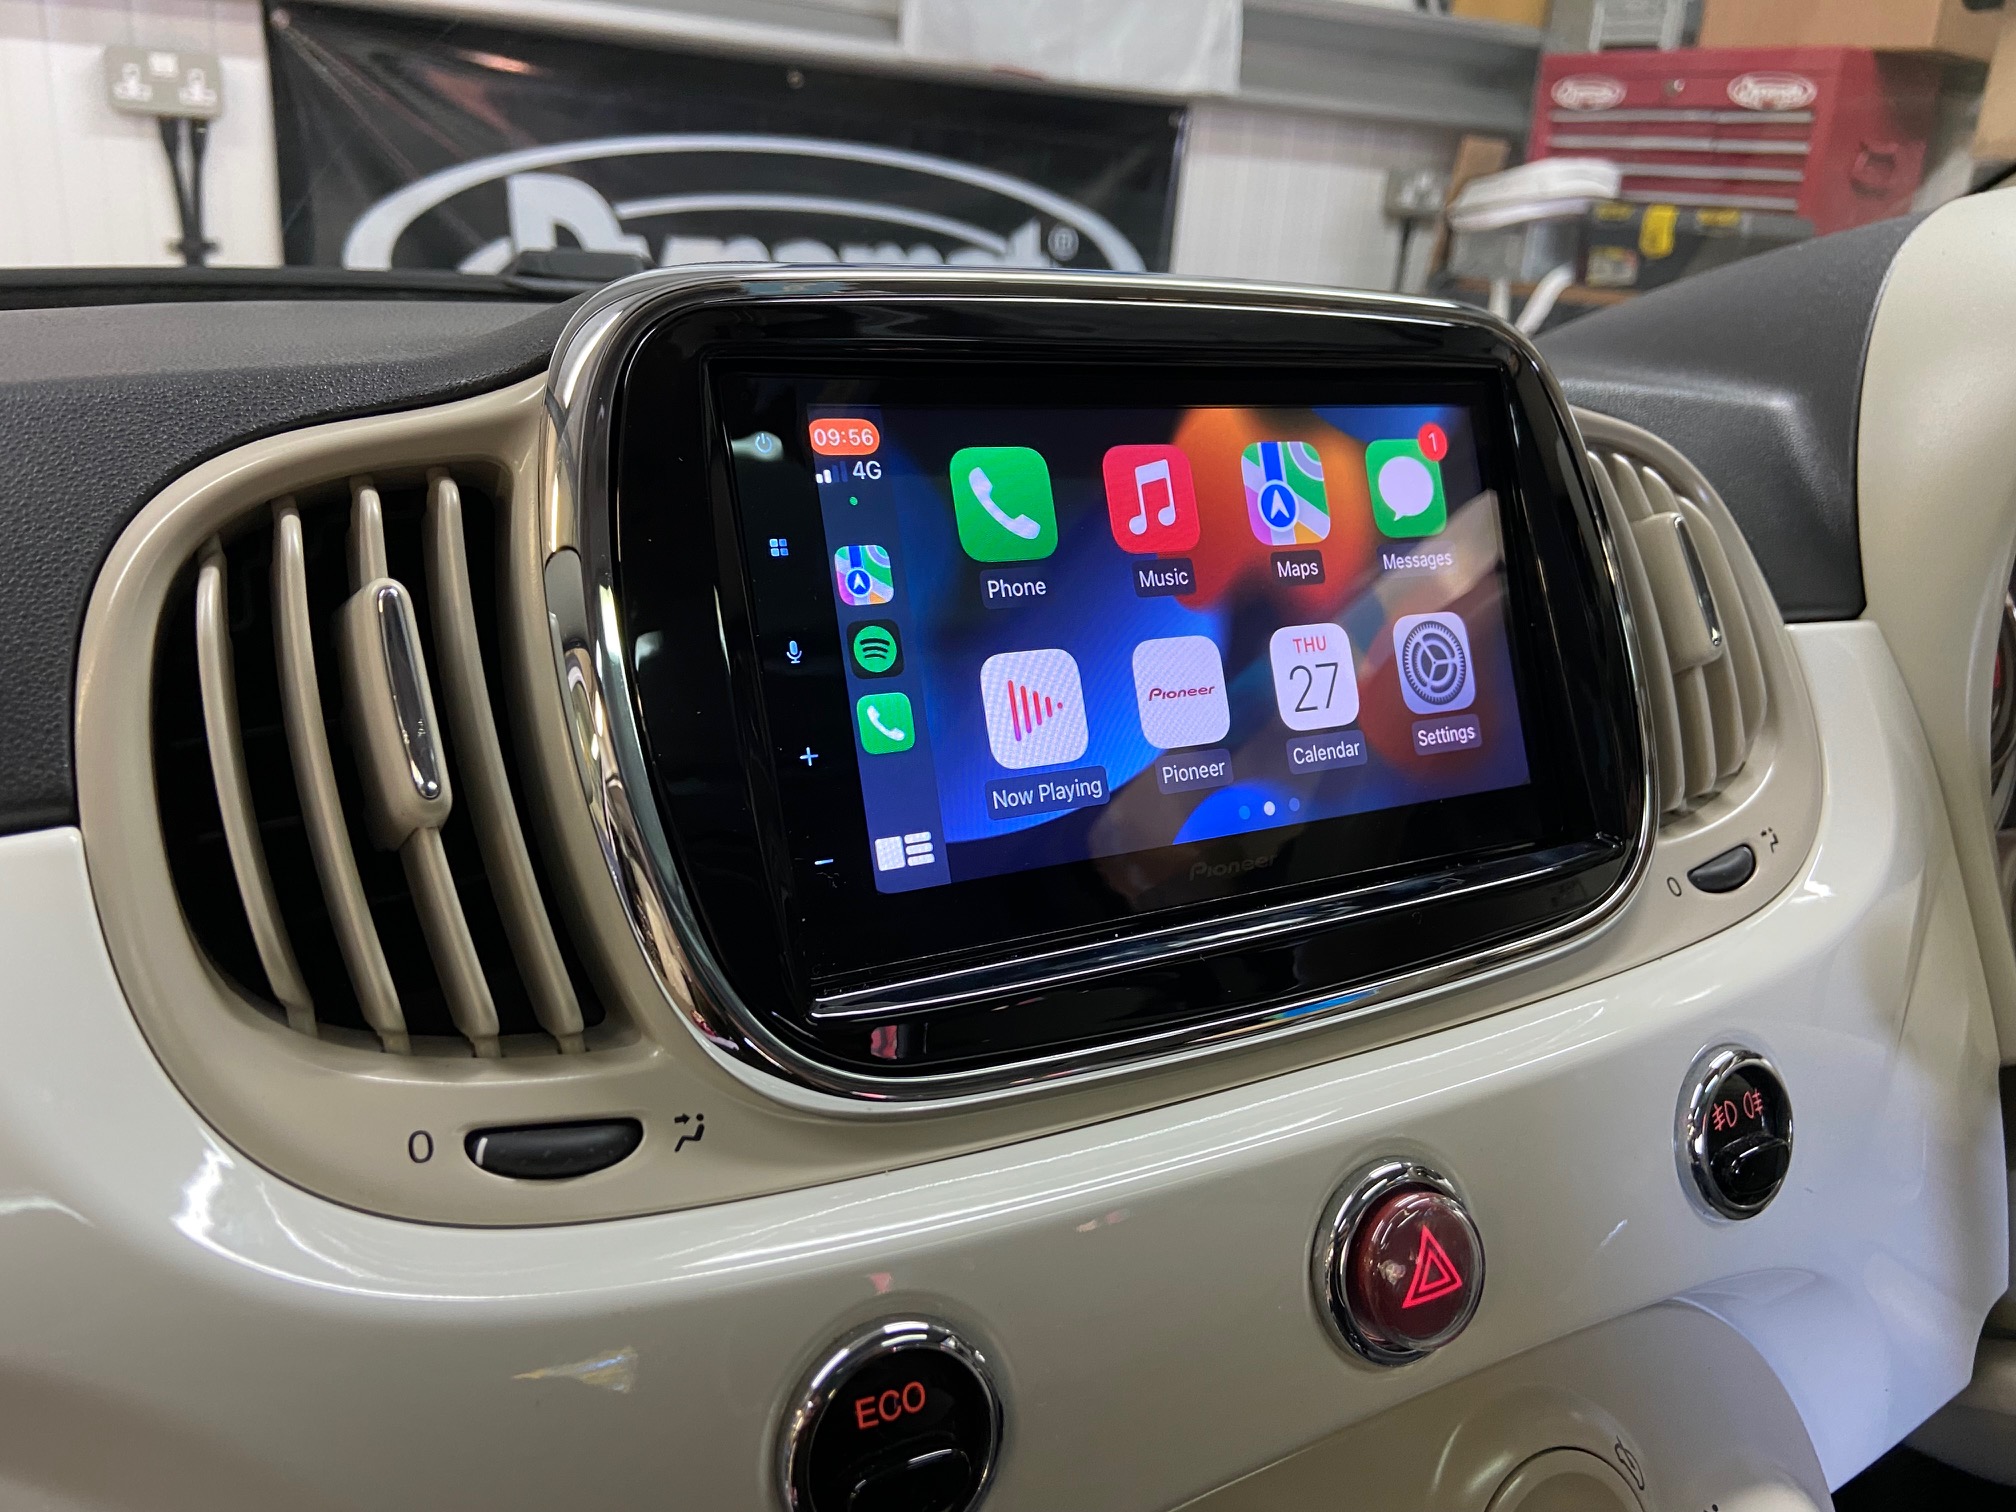 Navigation für Fiat 500, Carplay, Android, DAB, Bluetooth